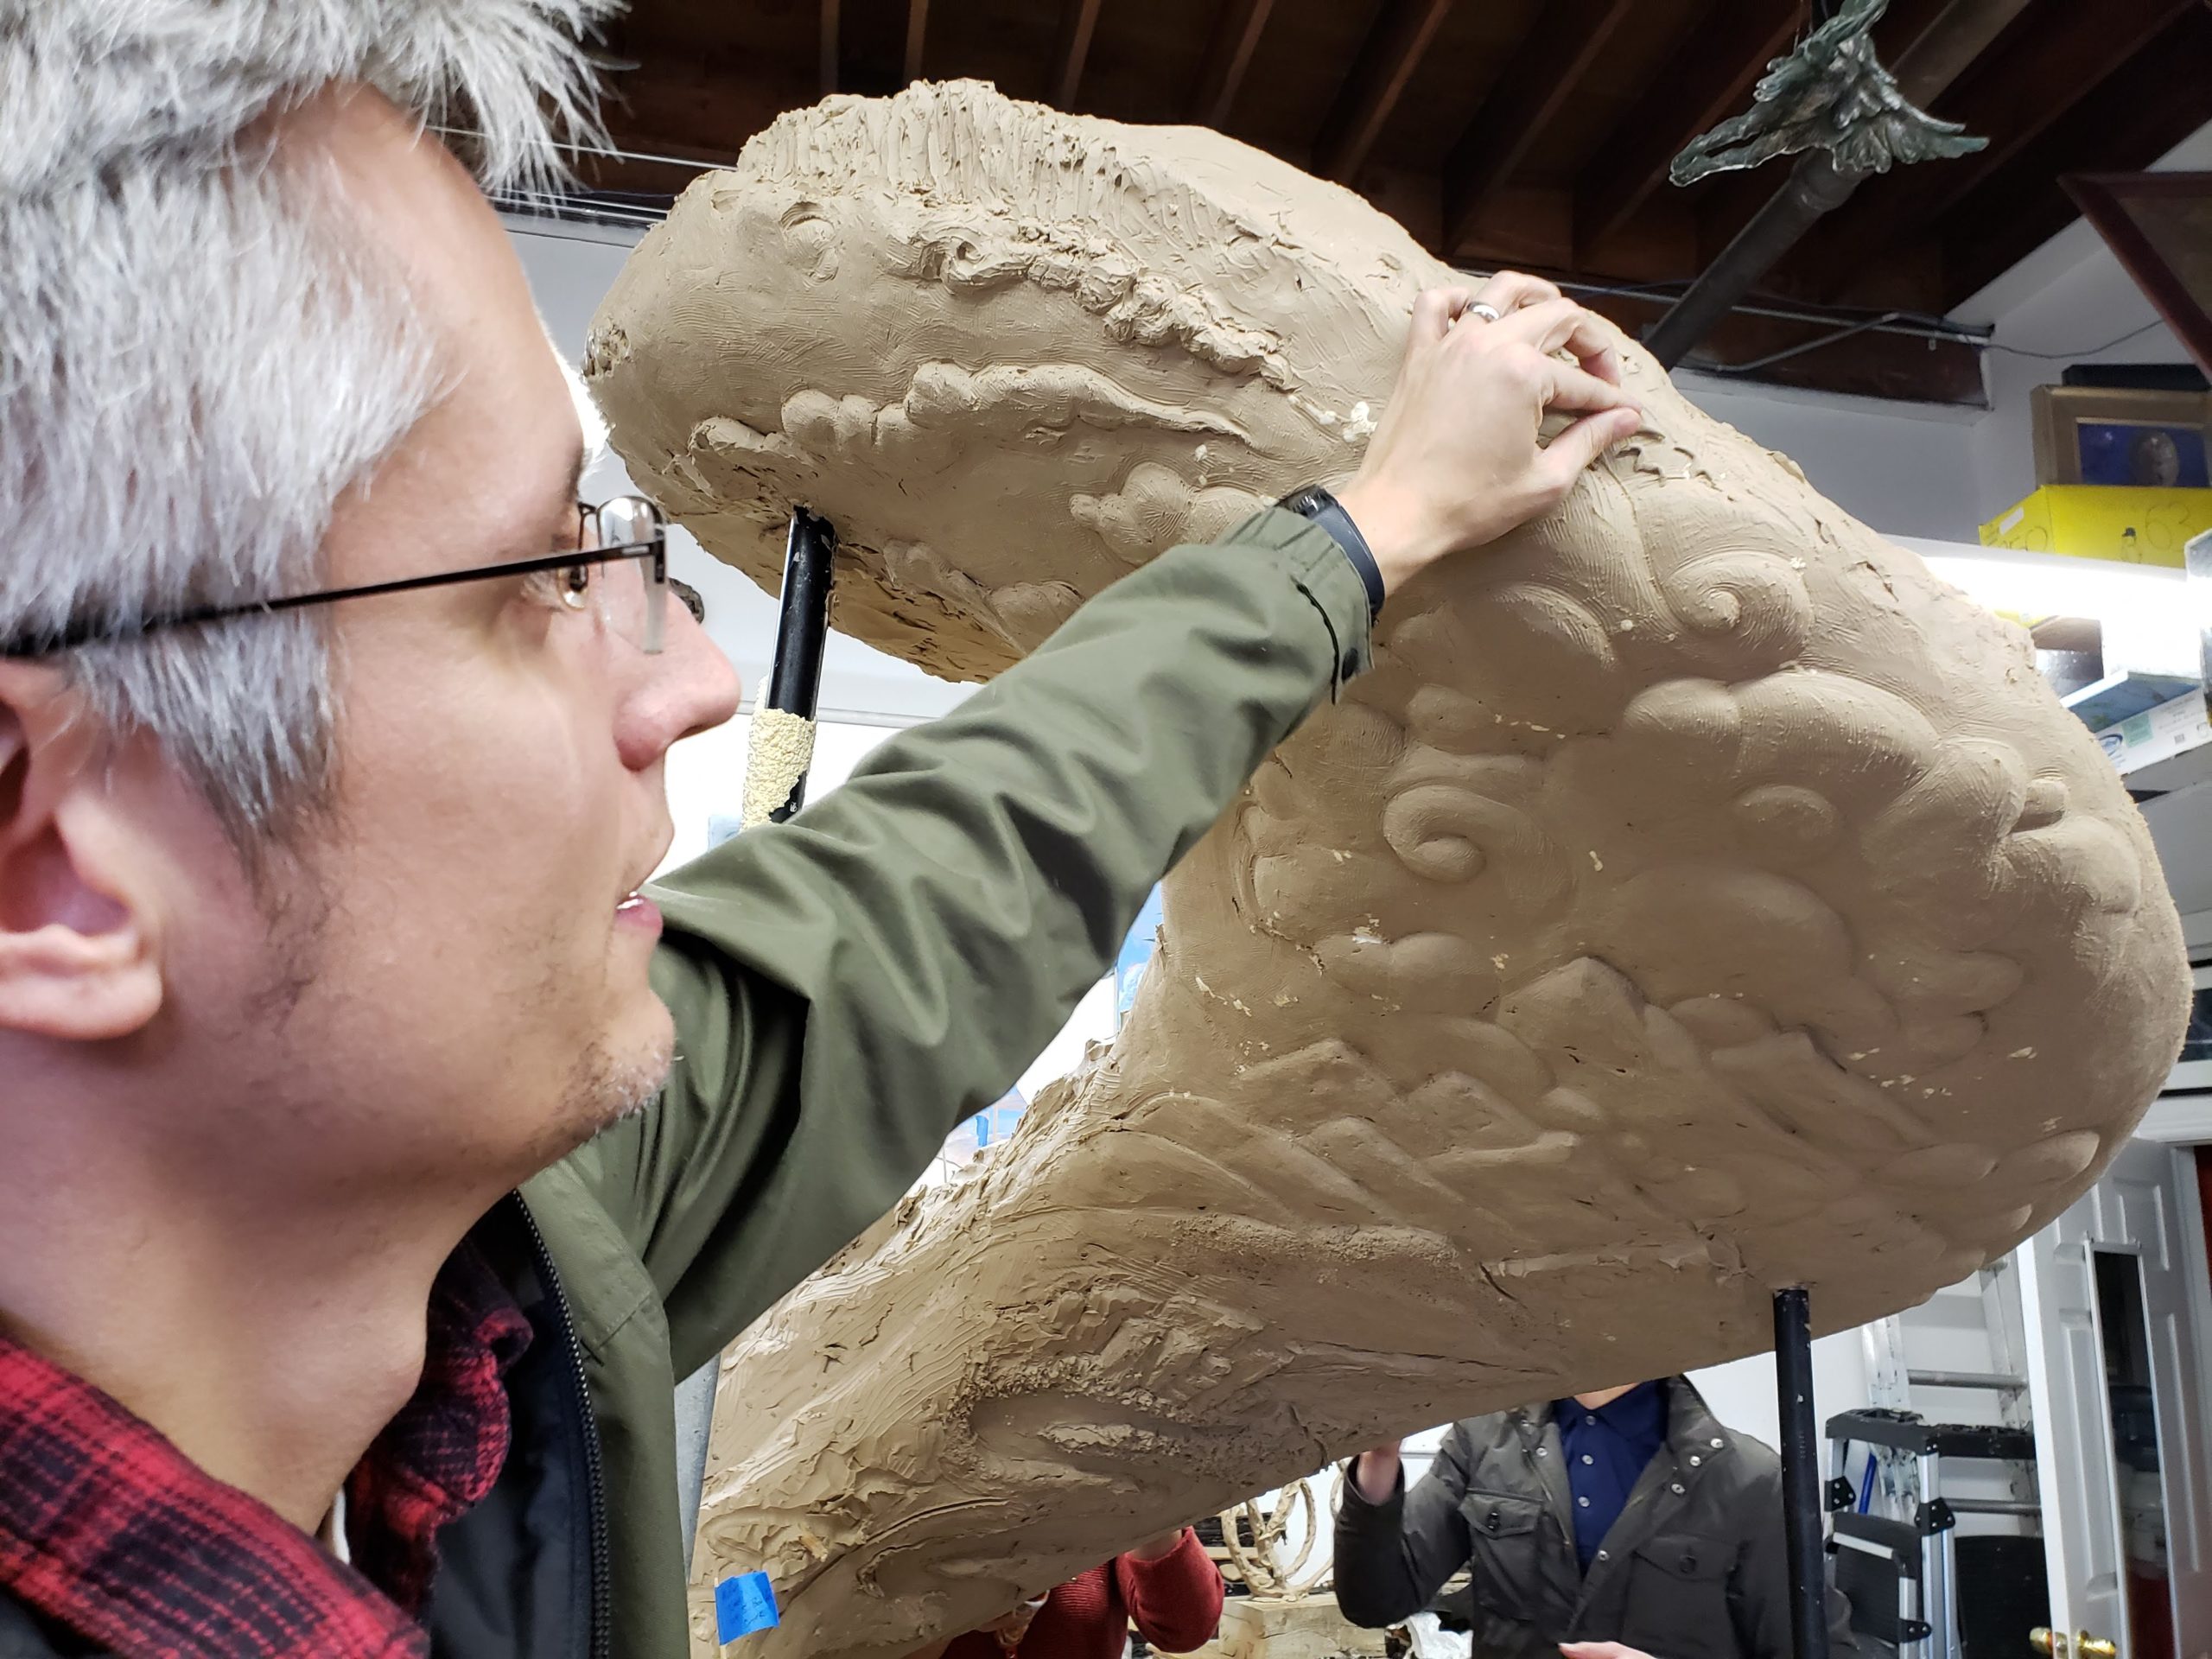 A man, arm raised high, presses a small clay bird into a massive clay sculpture.